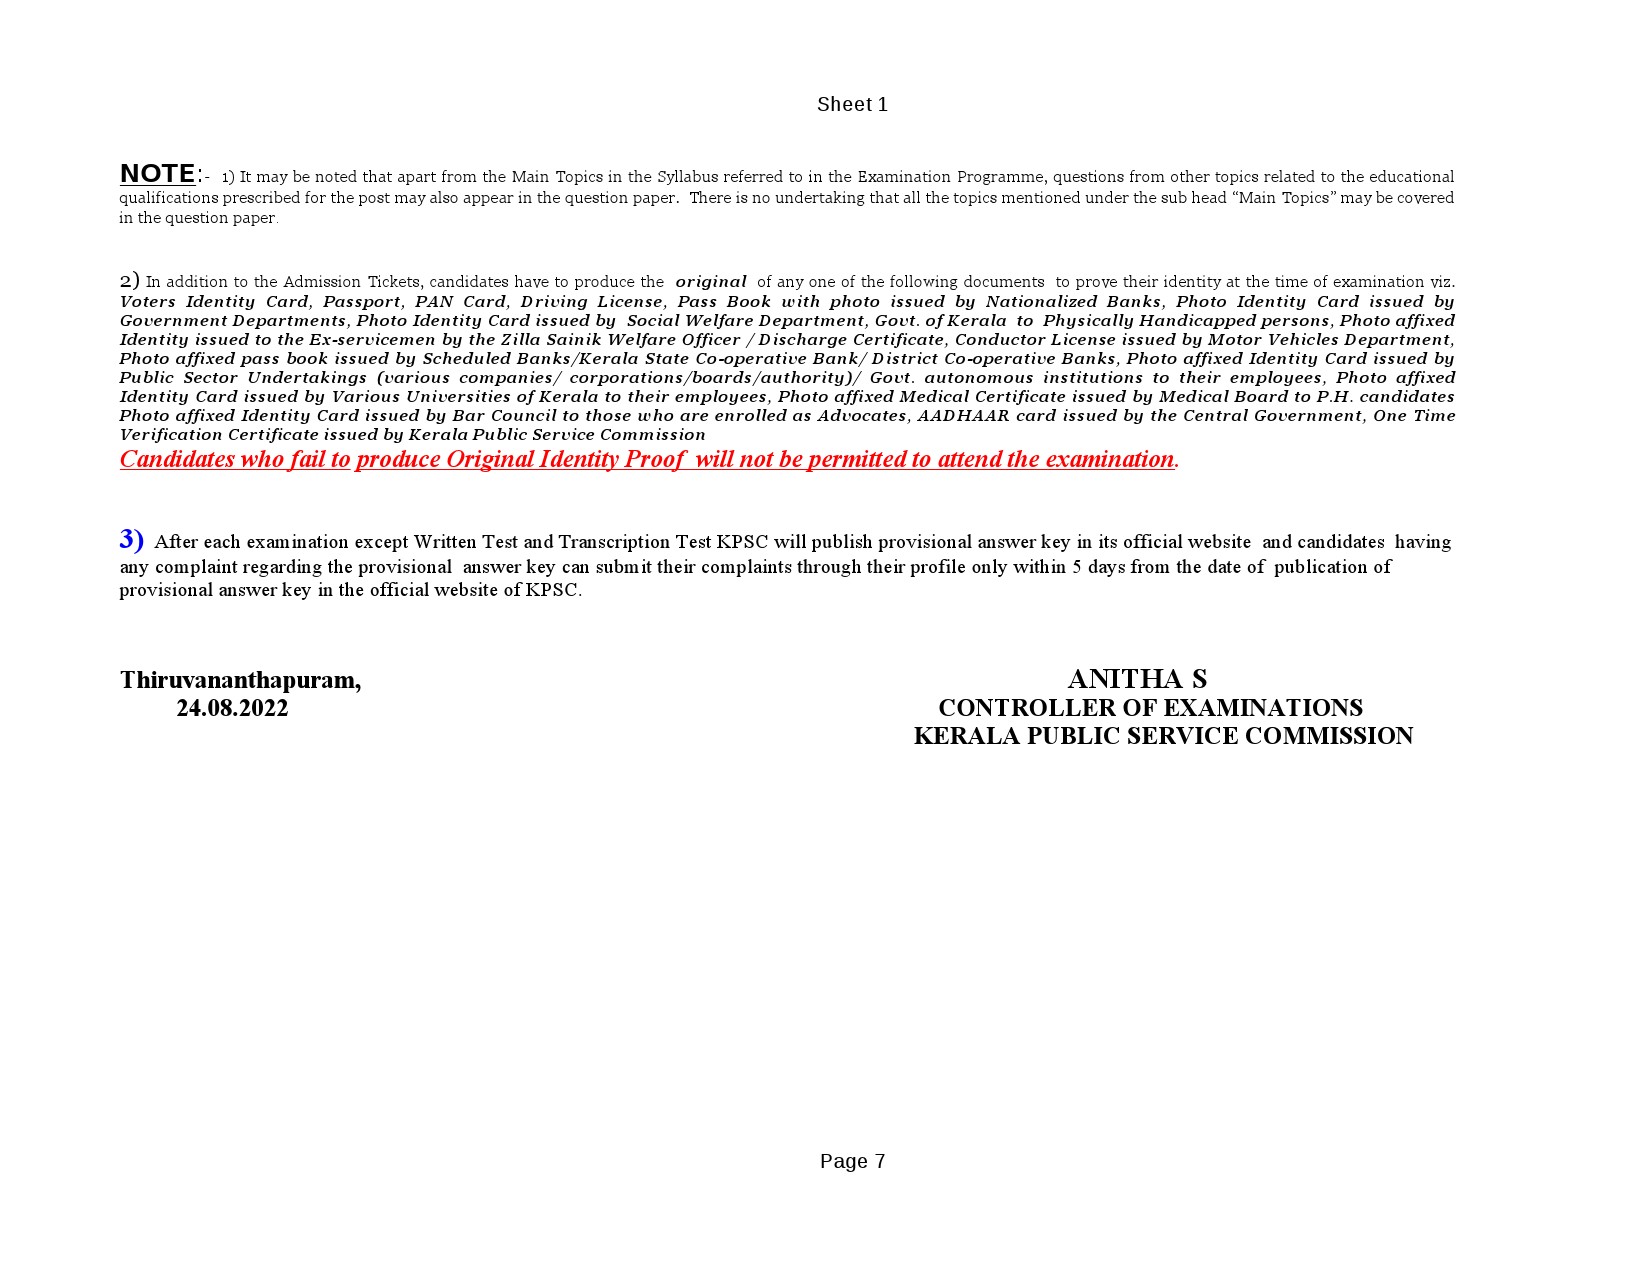 EXAMINATION FOR GRADUATE LEVEL COMMON PRELIMINARY EXAMINATION 2022 - Notification Image 7